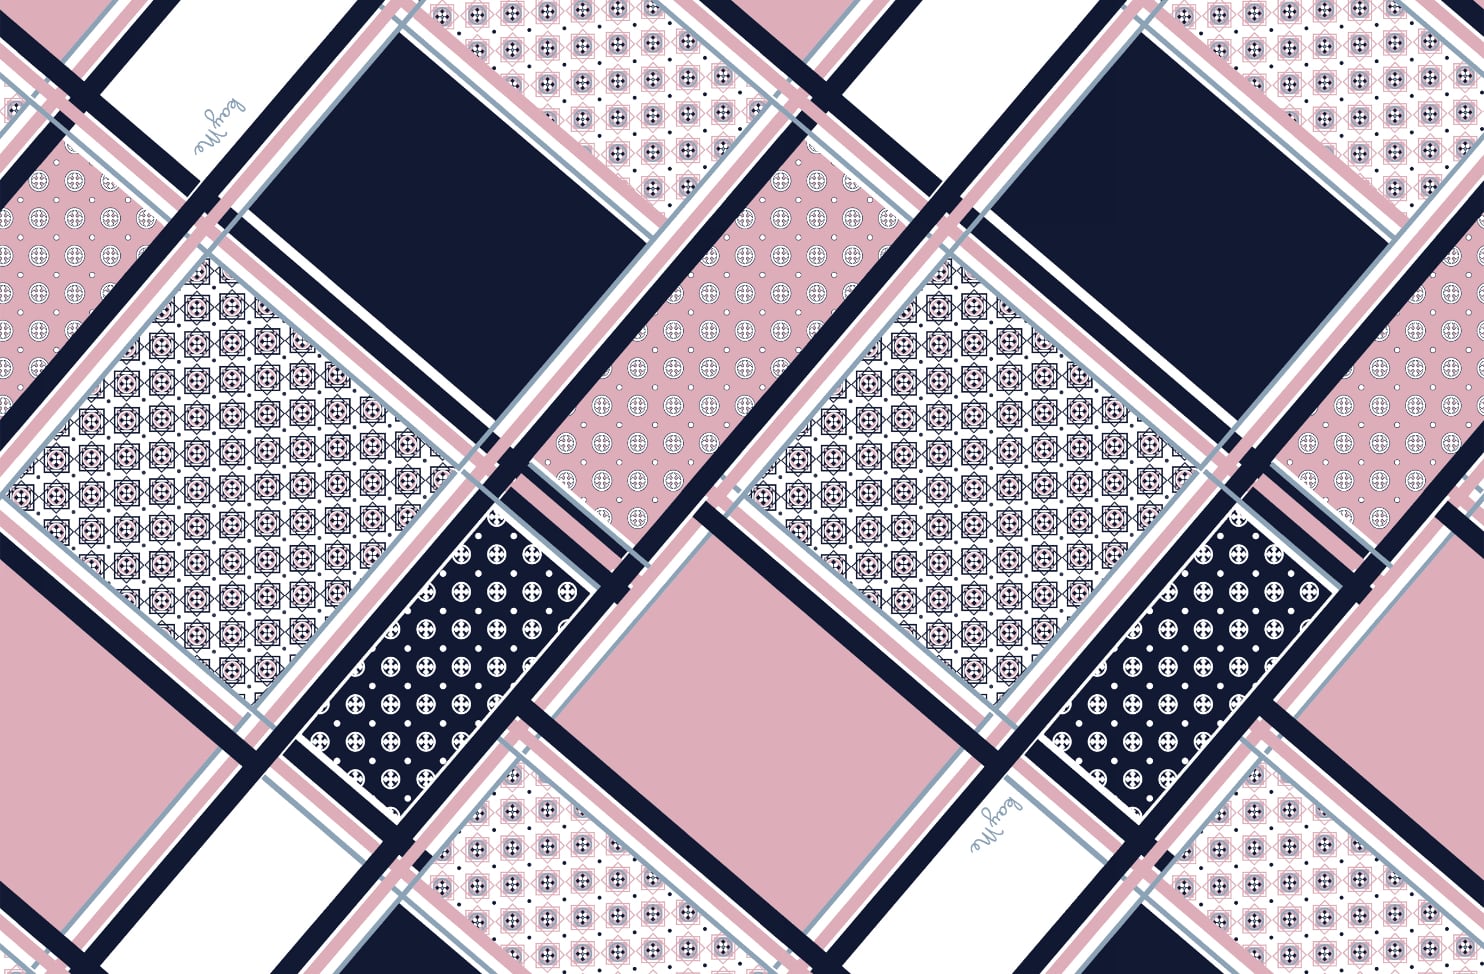 Pink_Pave_Pattern.jpg